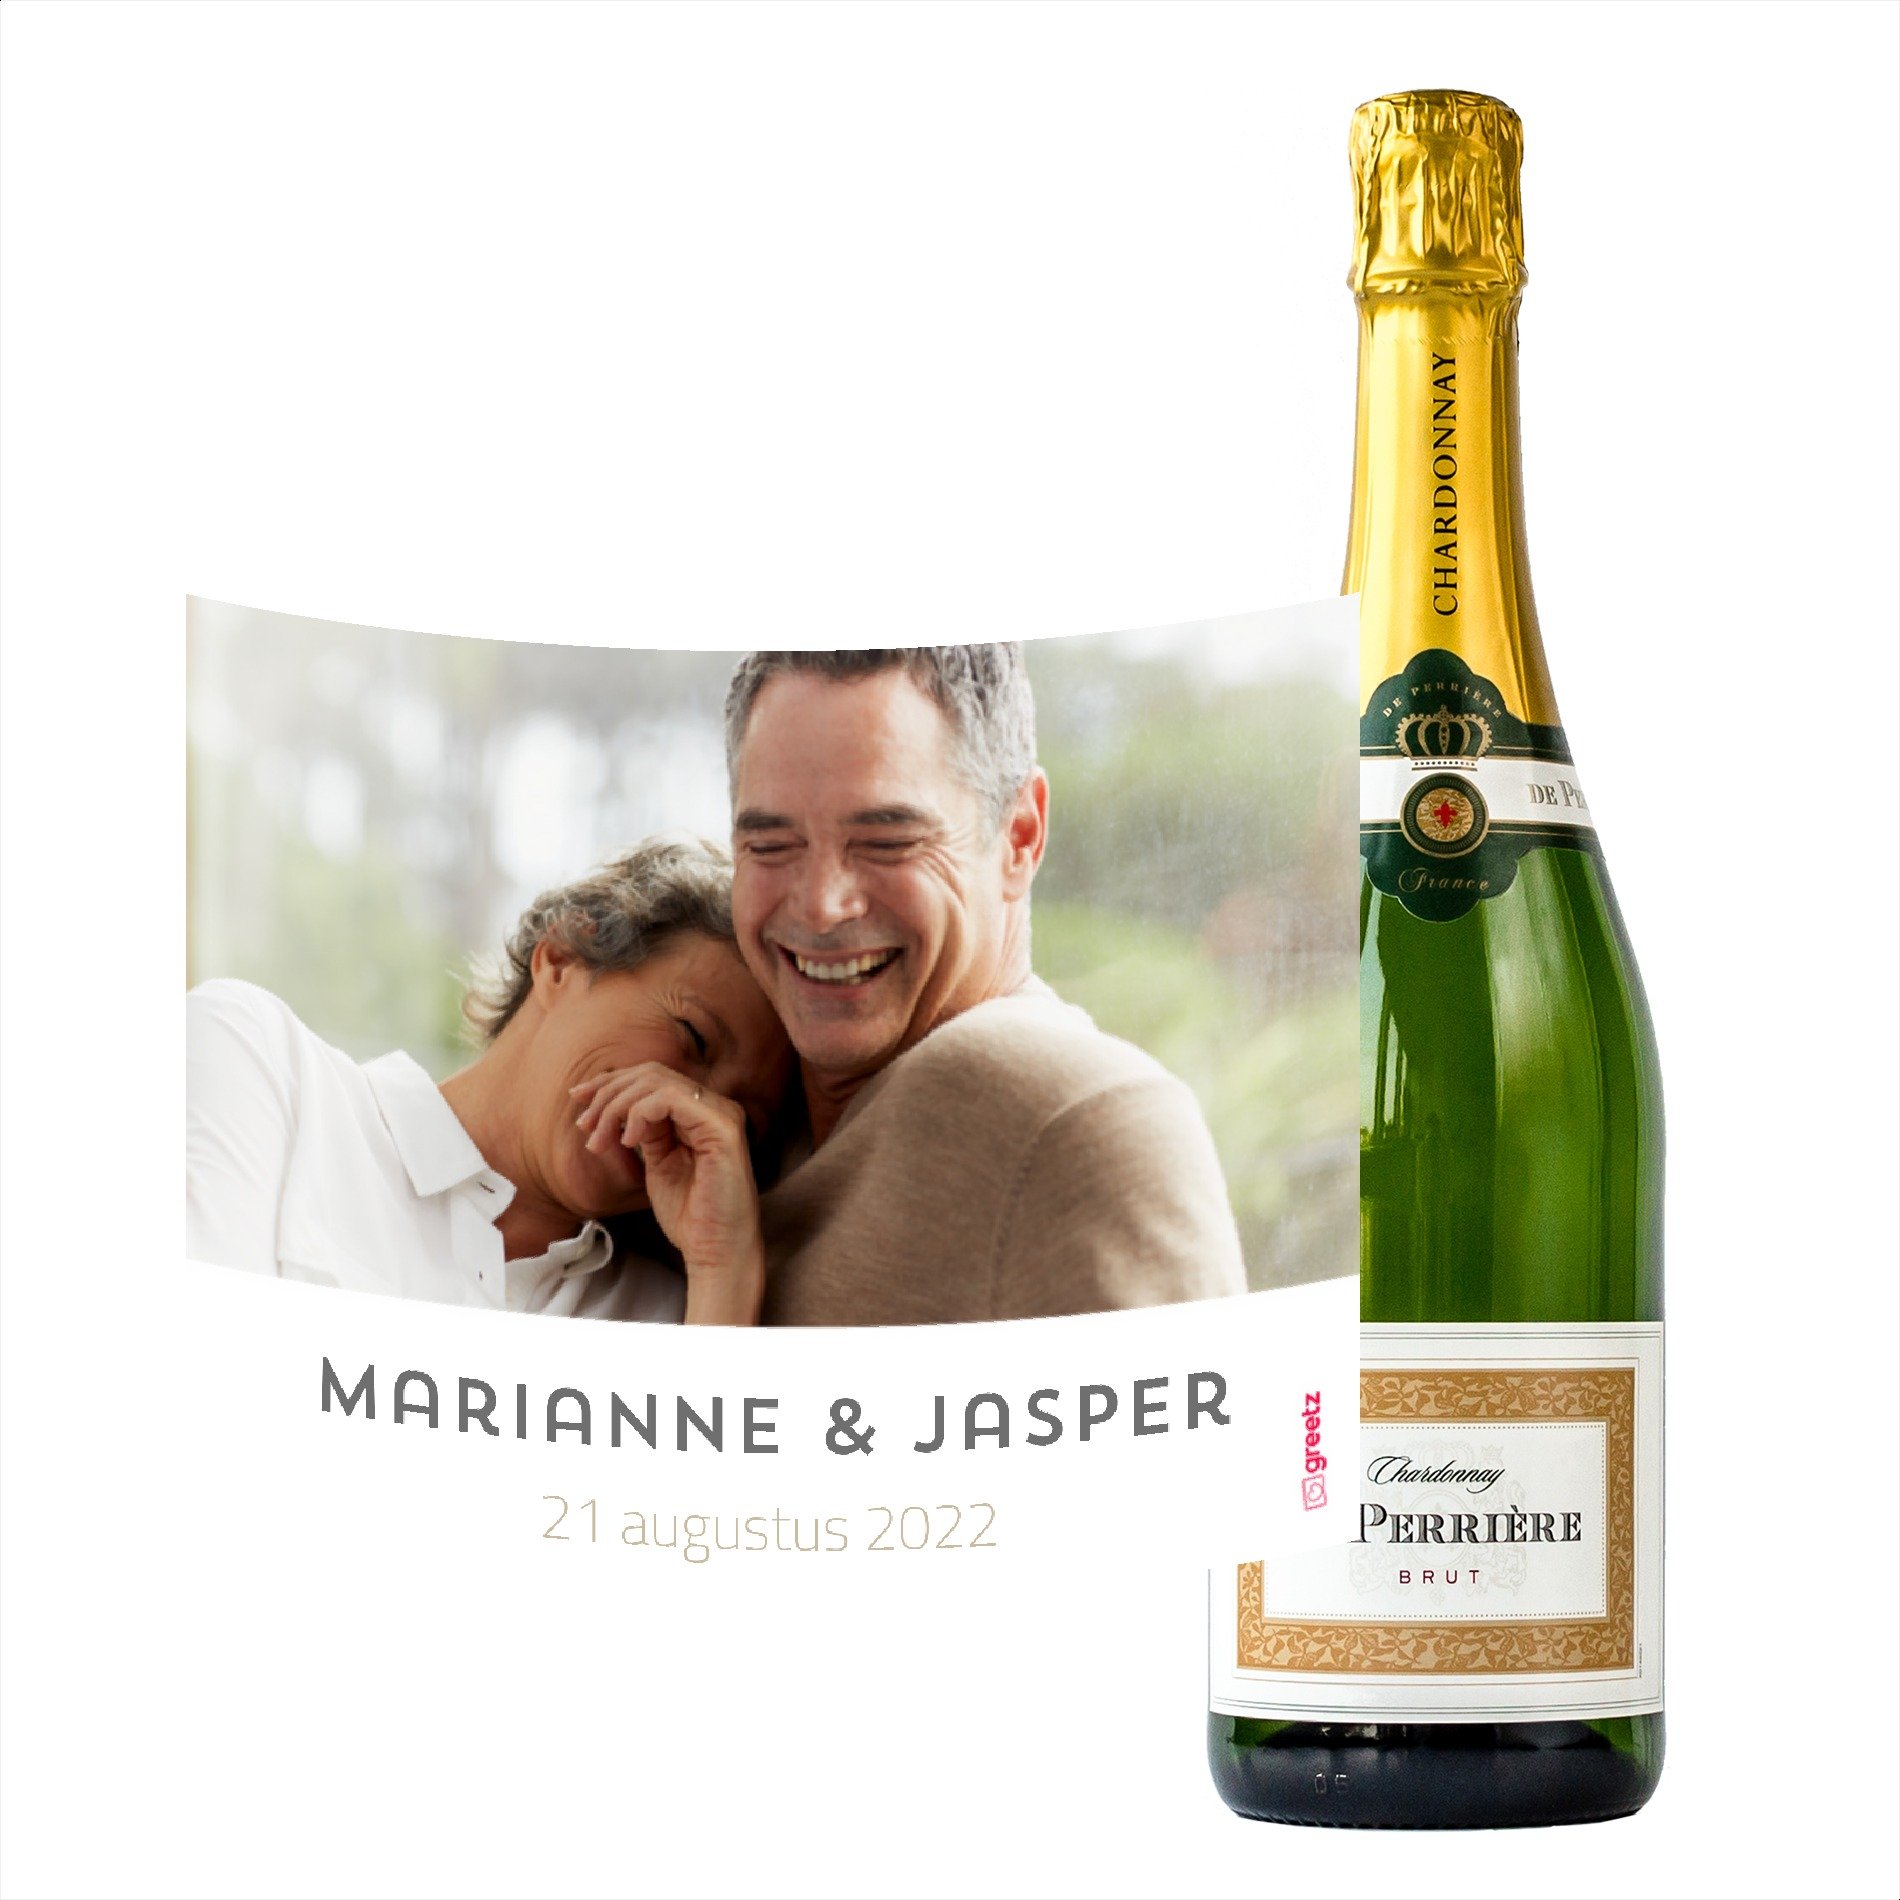 Perriere - Brut Chardonnay - Love met eigen foto en tekst - 750ml